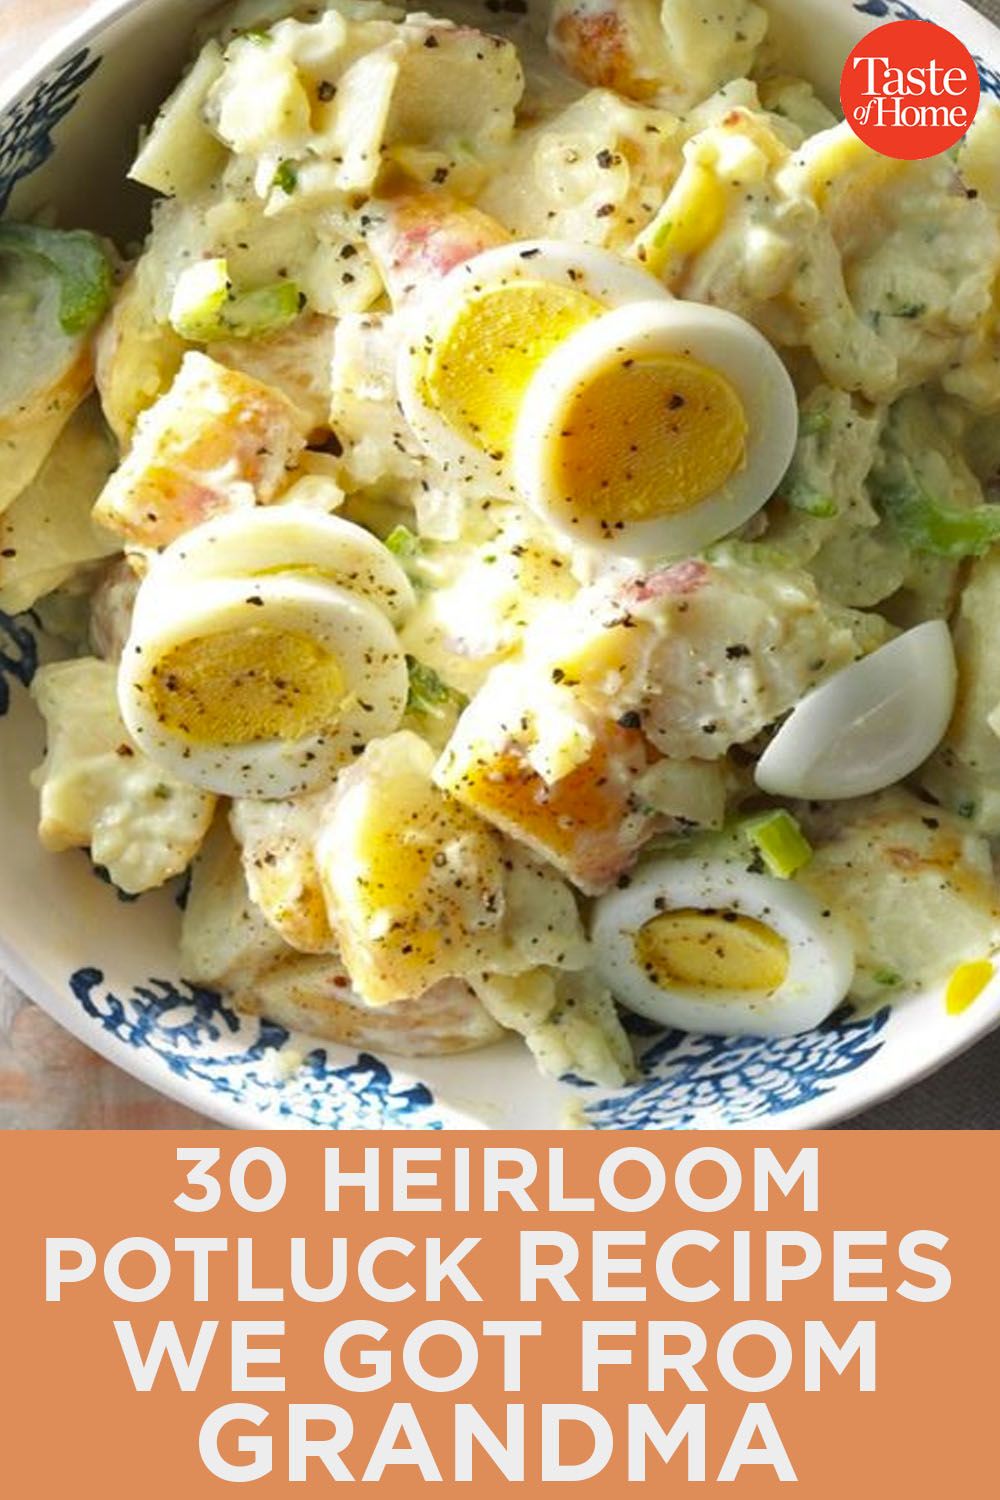 30 Heirloom Potluck Recipes We Got from Grandma